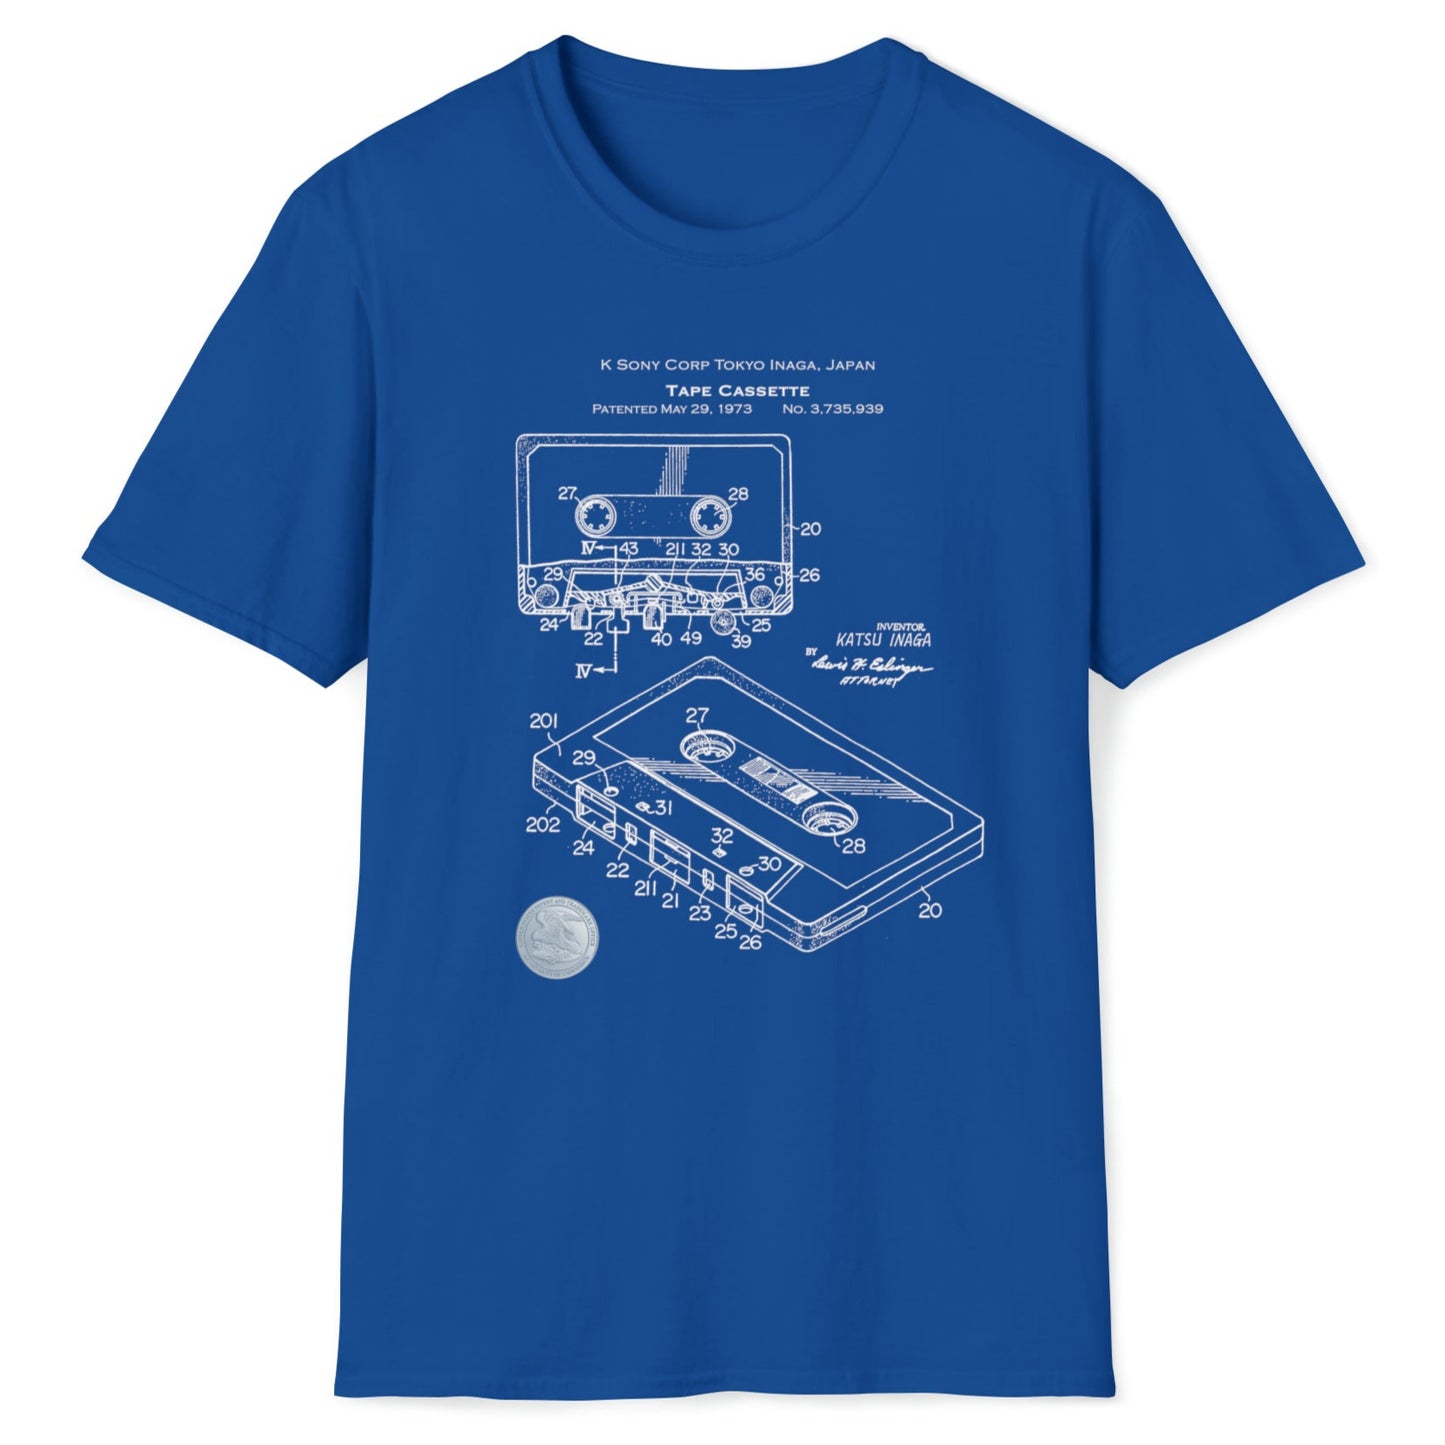 Music Cassette Tape Patent Retro Blueprint, Softstyle T-Shirt, Unisex, Gift for Music Nerds, Audiophiles, 1973